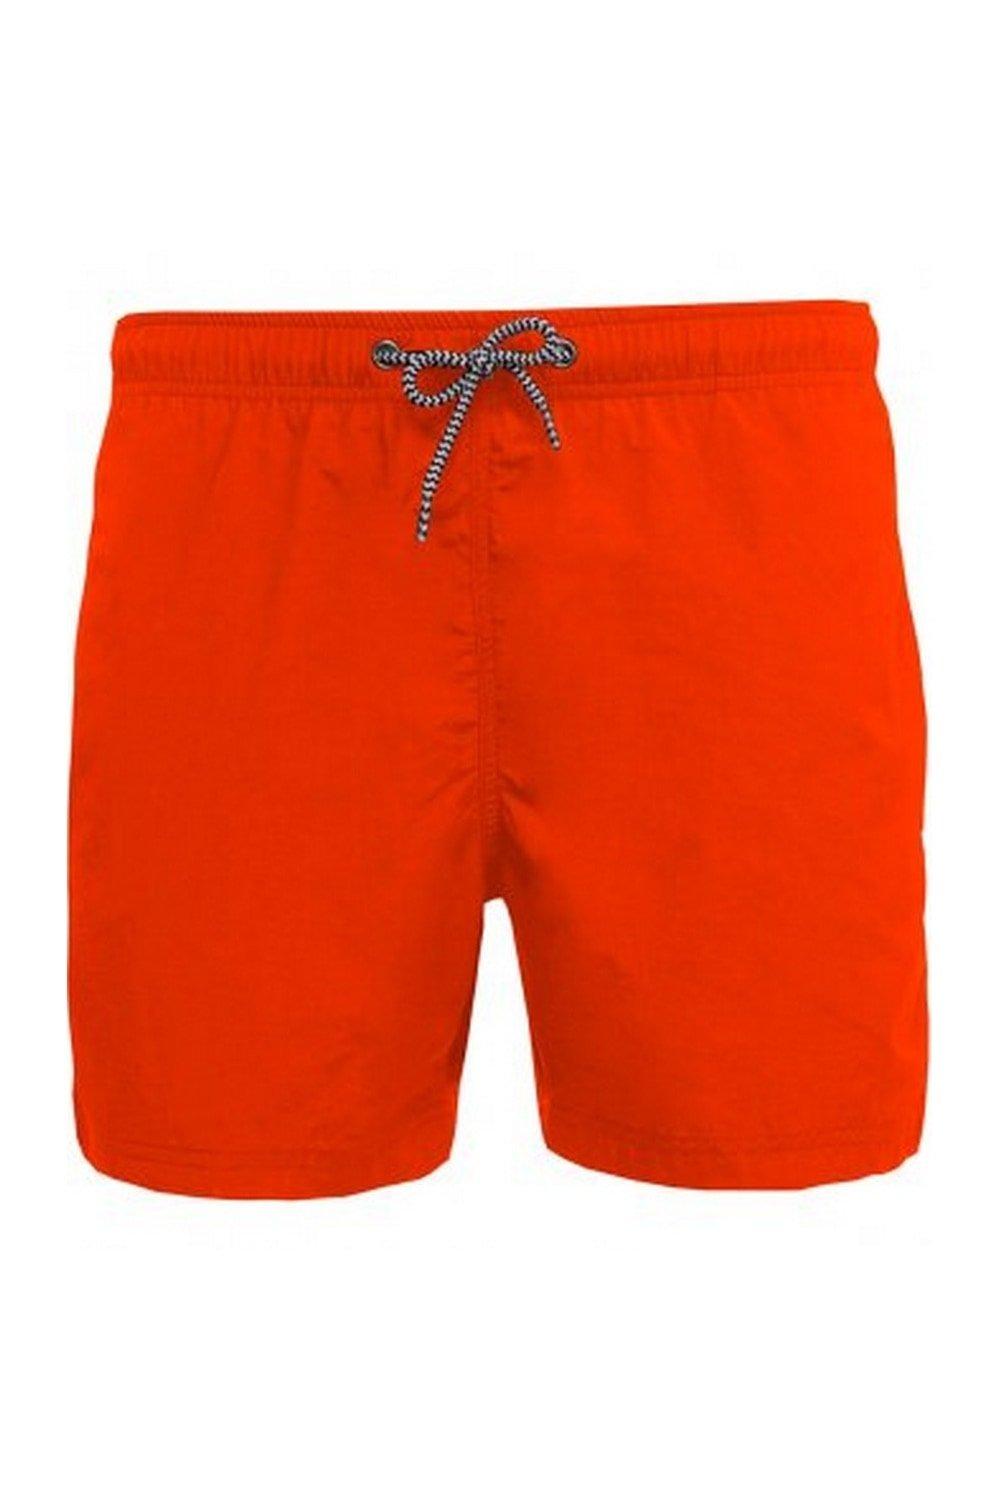 Swimming Shorts product